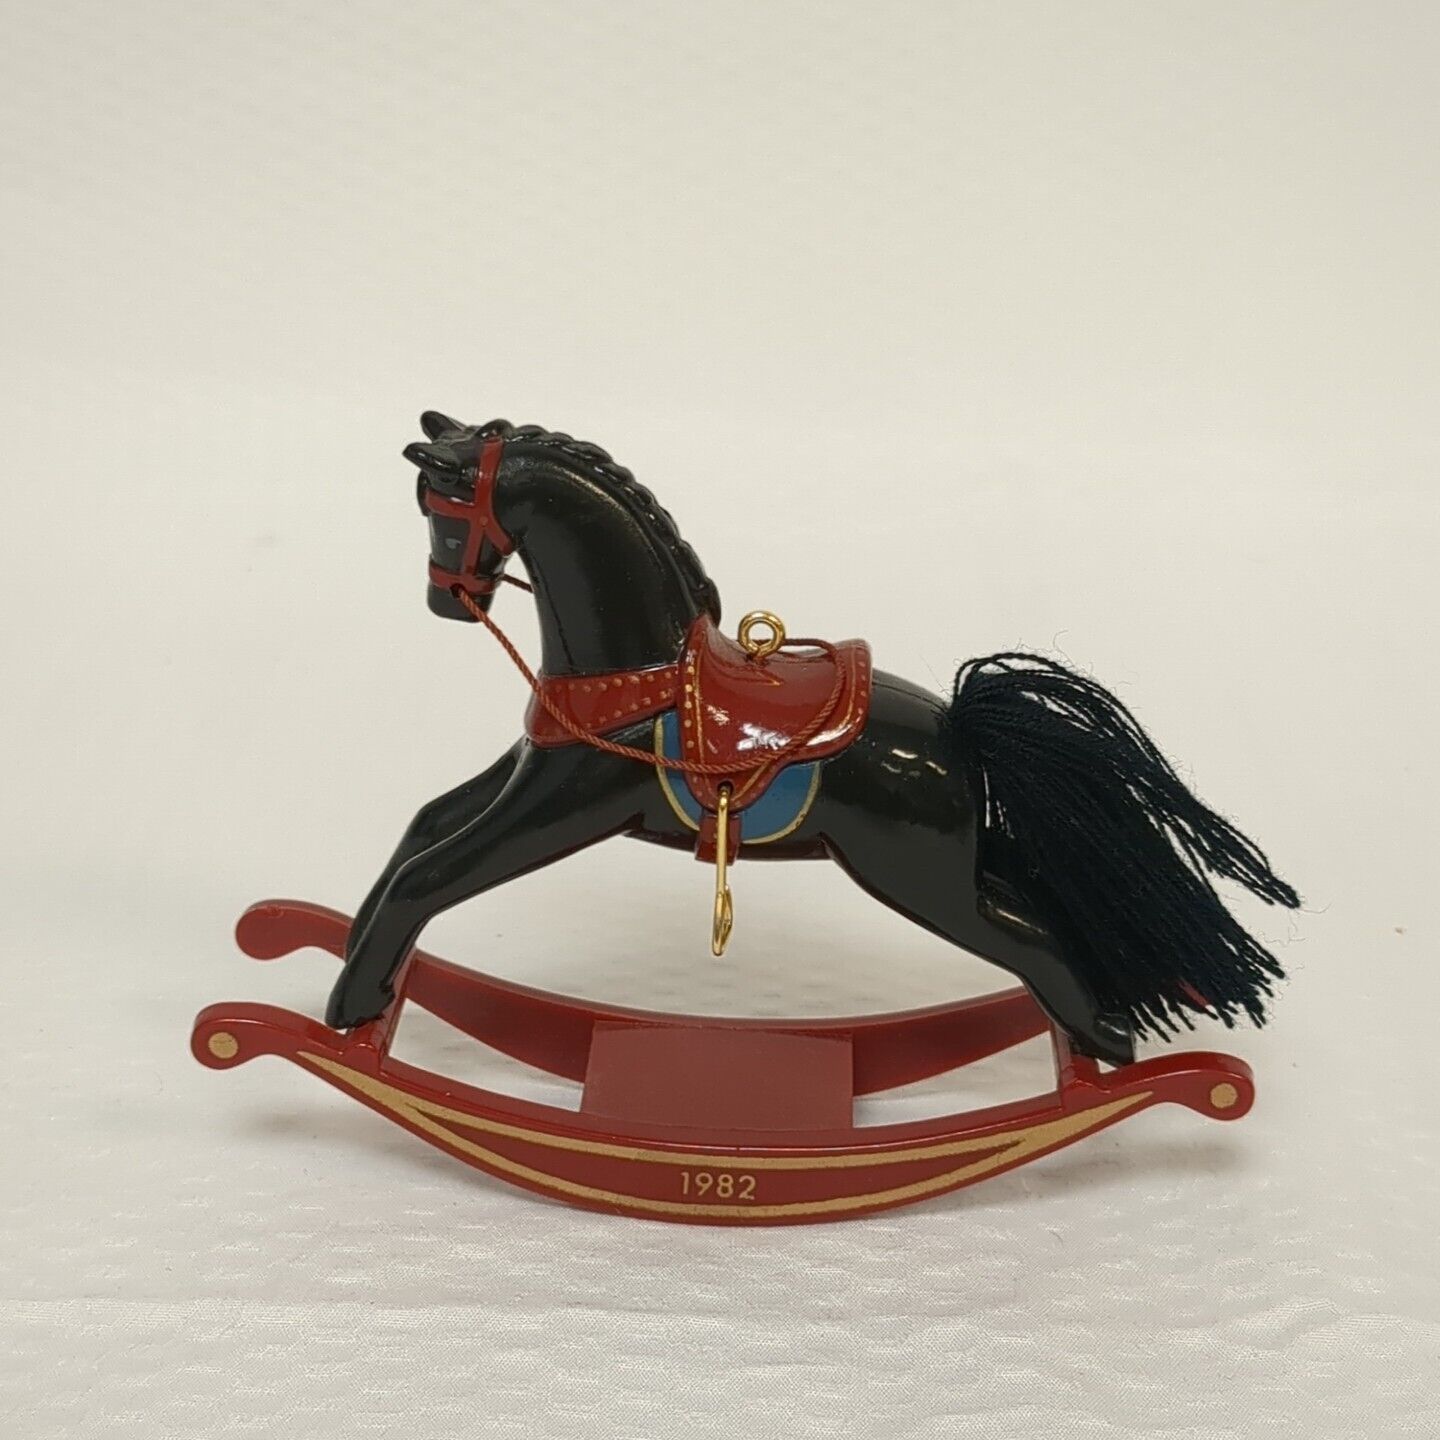 Vintage Hallmark Christmas Ornament 1982 Black Rocking Horse 2nd in Series